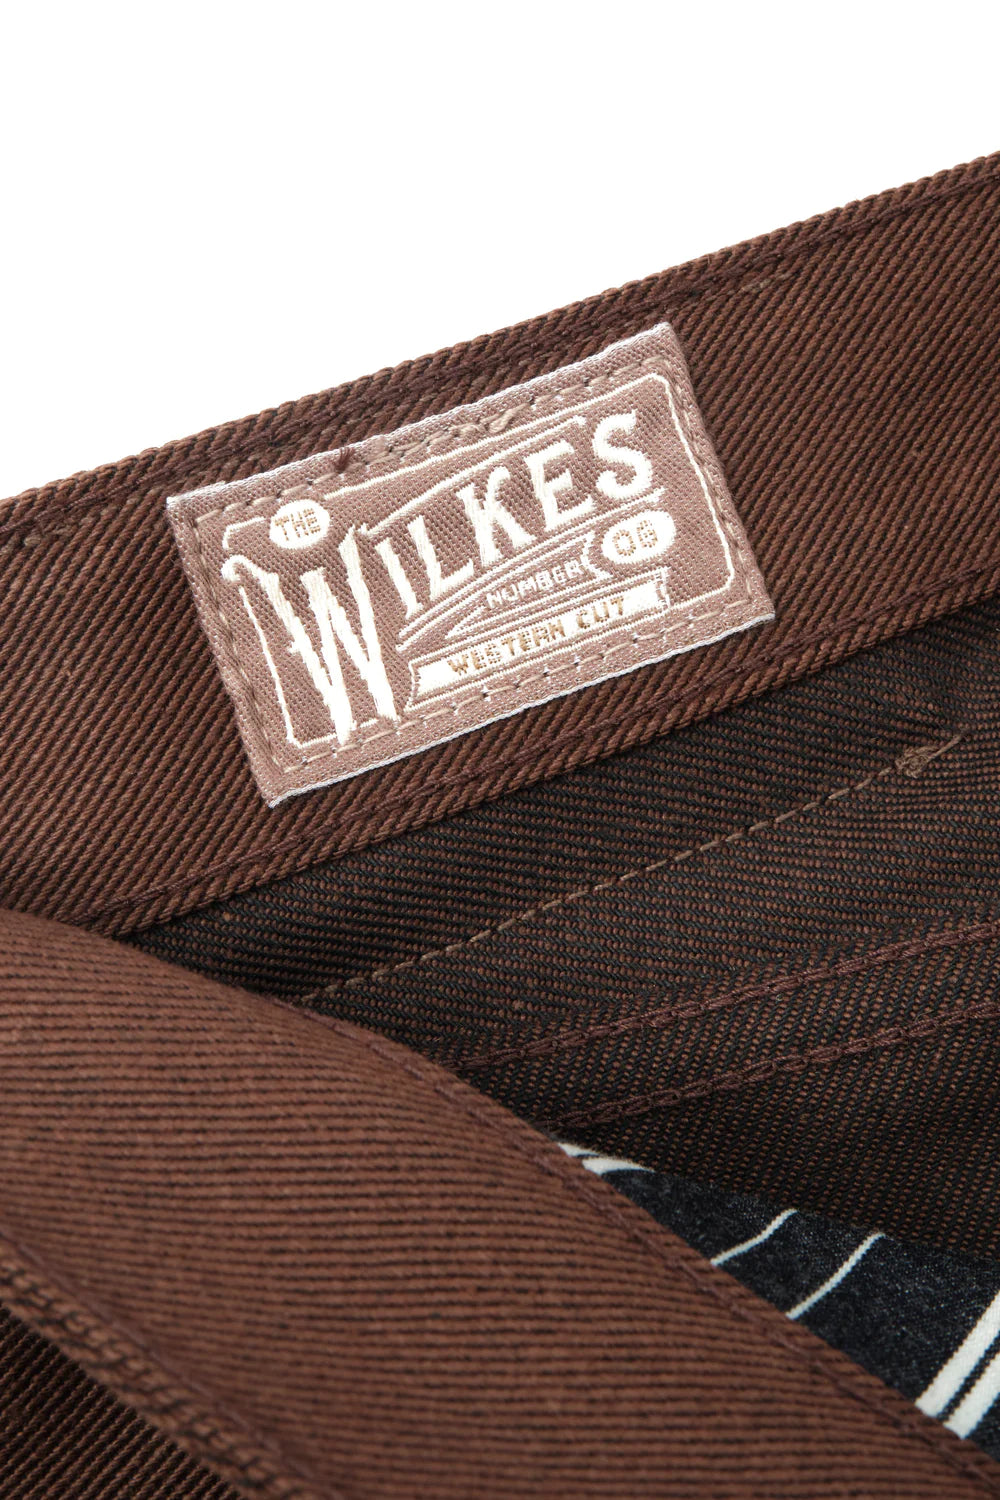 Freenote Cloth Wilkes - 15oz Dark Brown Denim